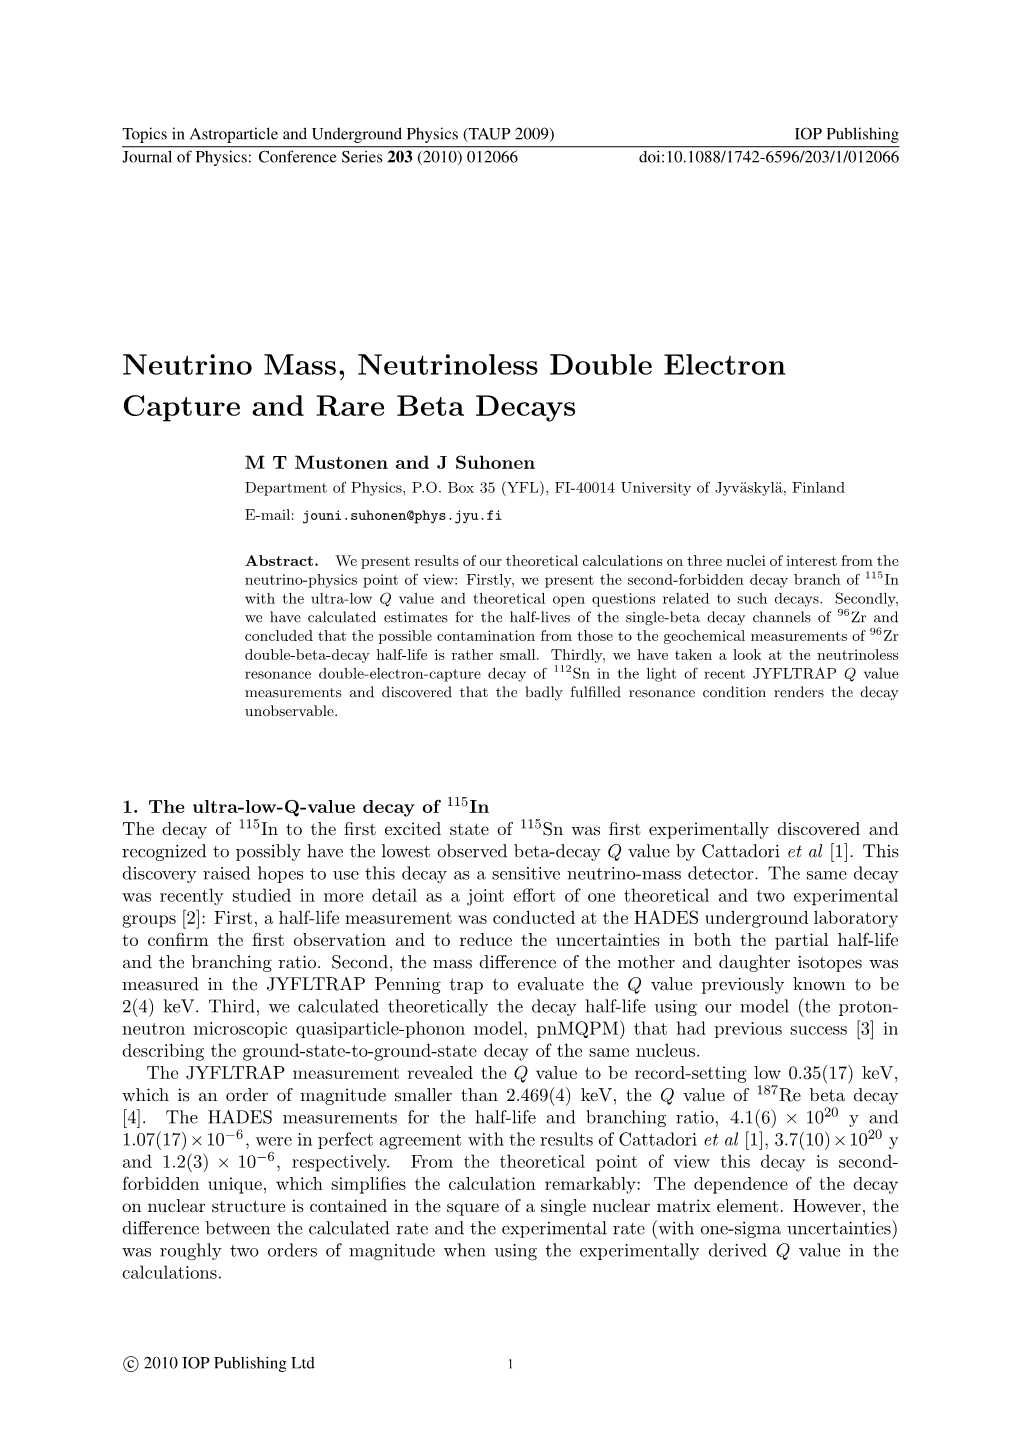 Neutrino Mass, Neutrinoless Double Electron Capture and Rare Beta Decays